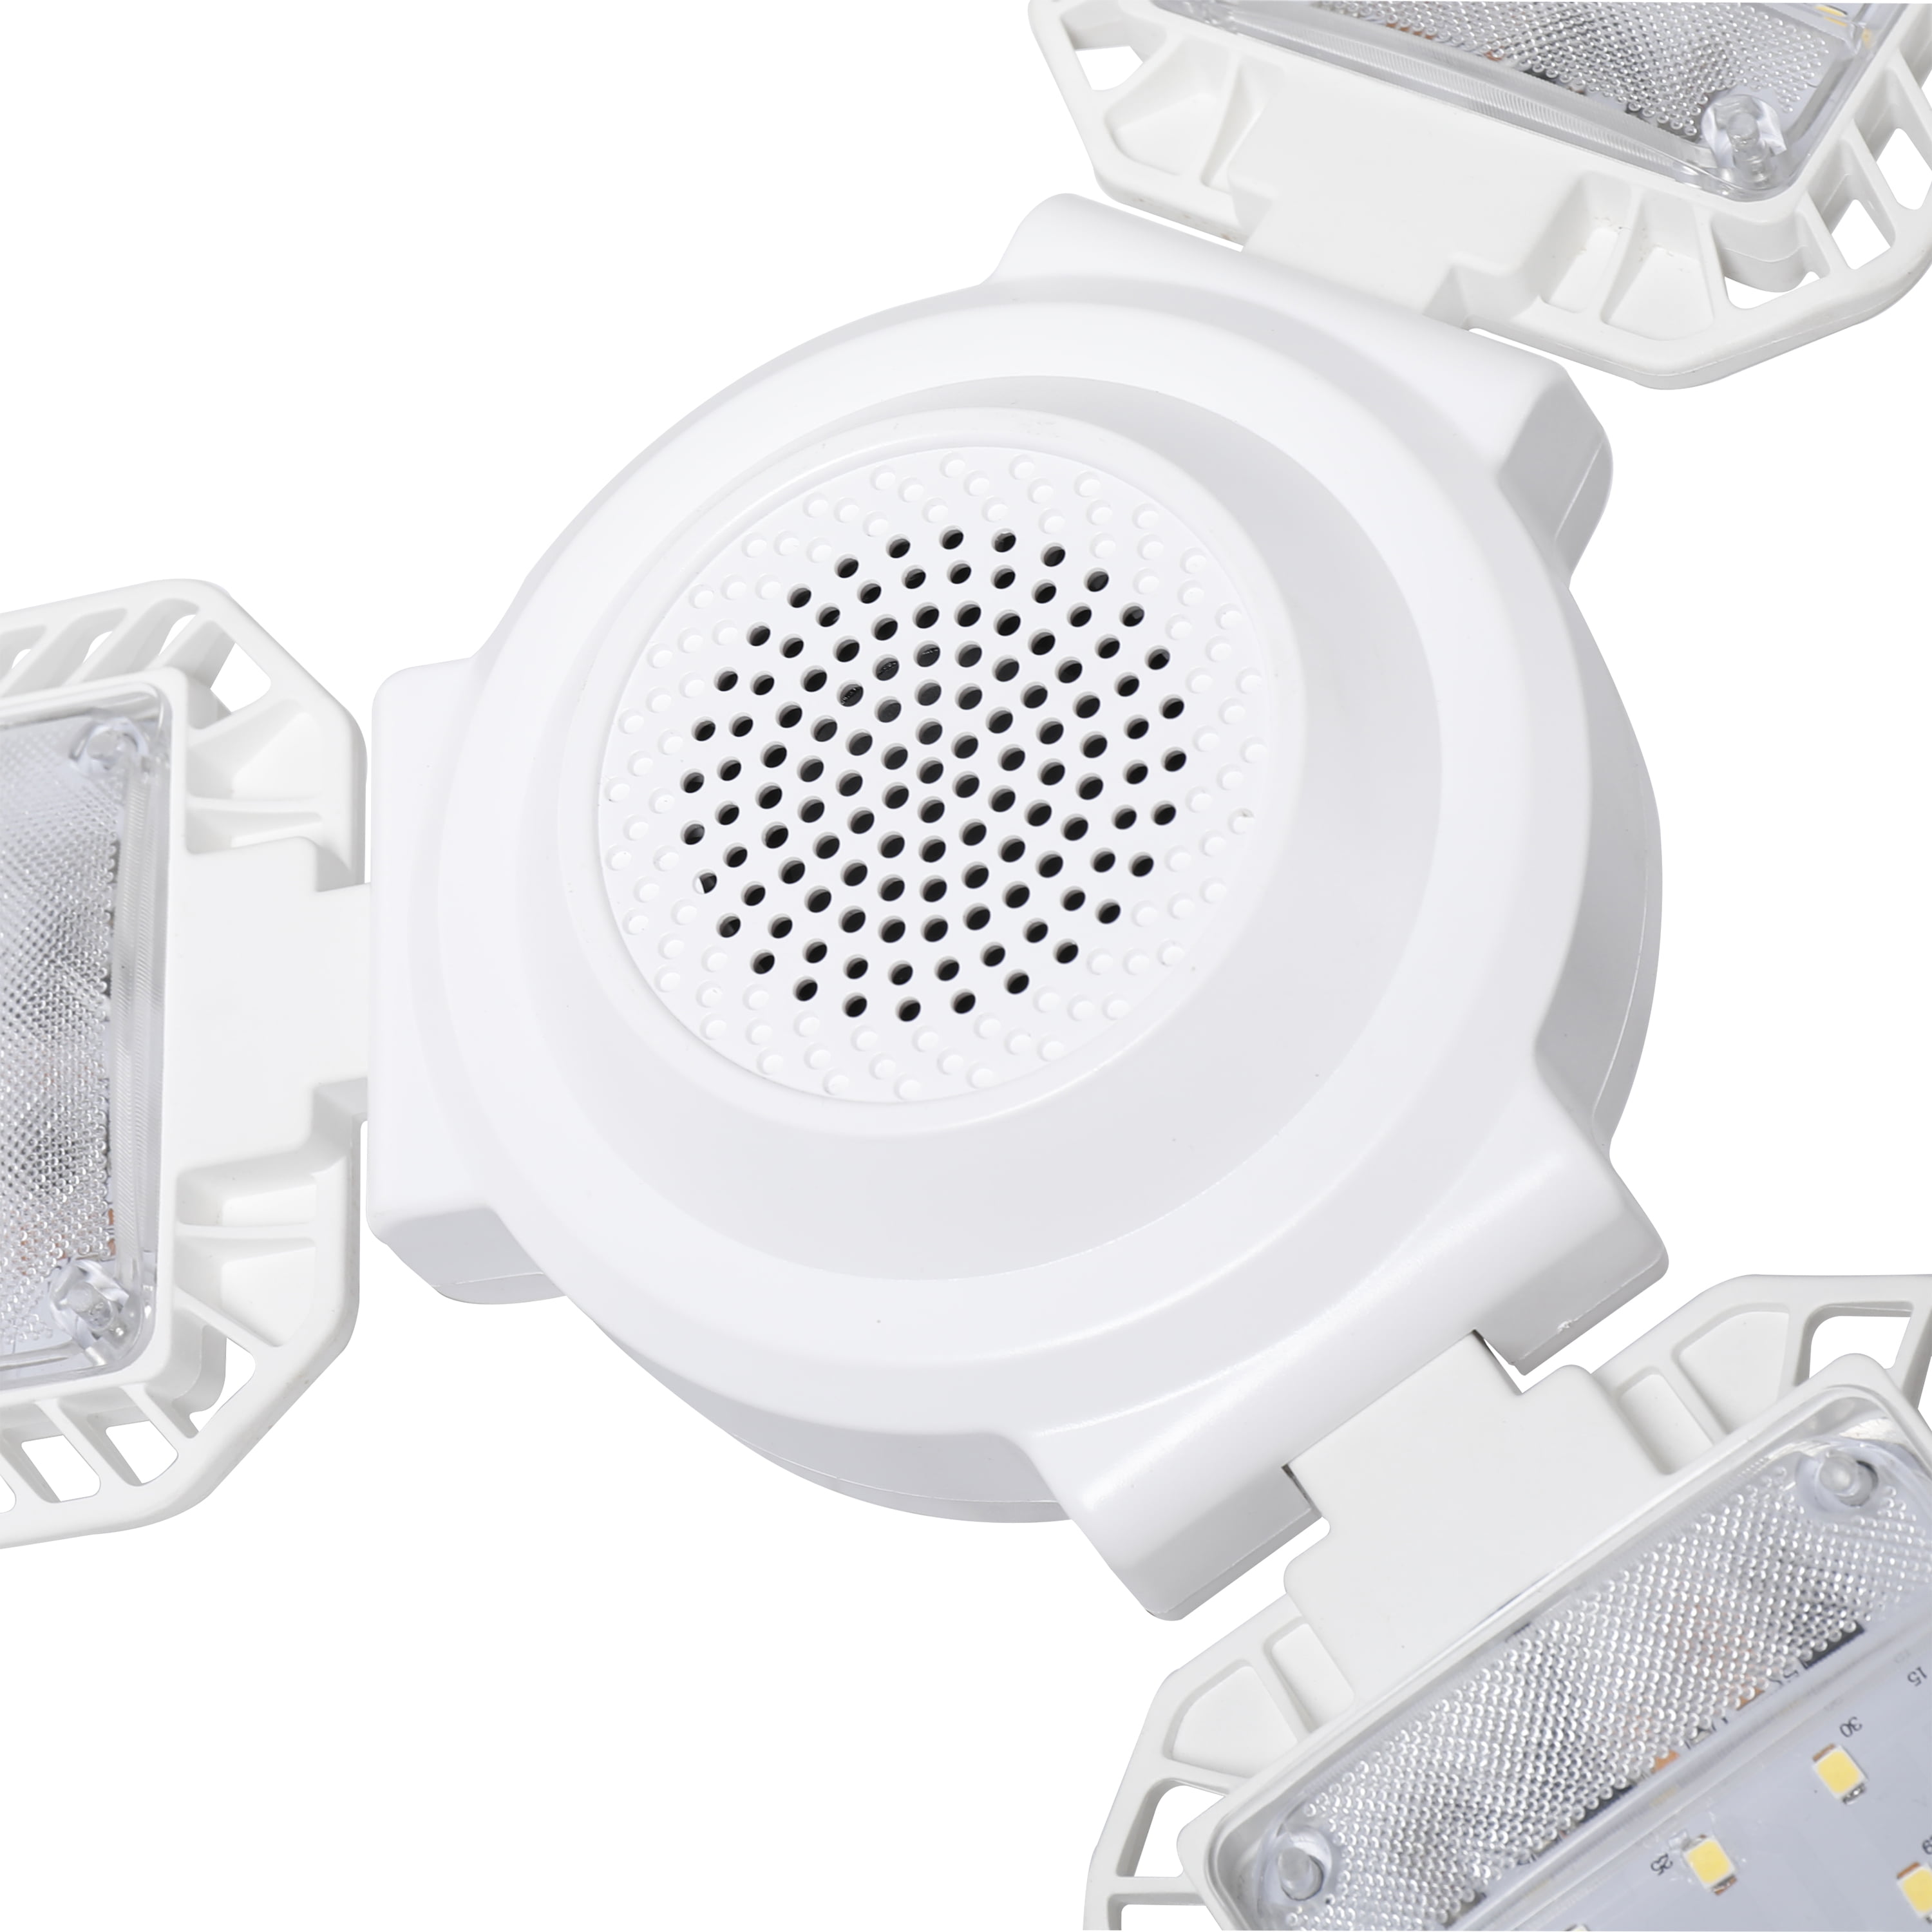 Great Value 3000 Lumen Deformable LED Garage Light with Bluetooth Speaker  E26 Bulb Base in White